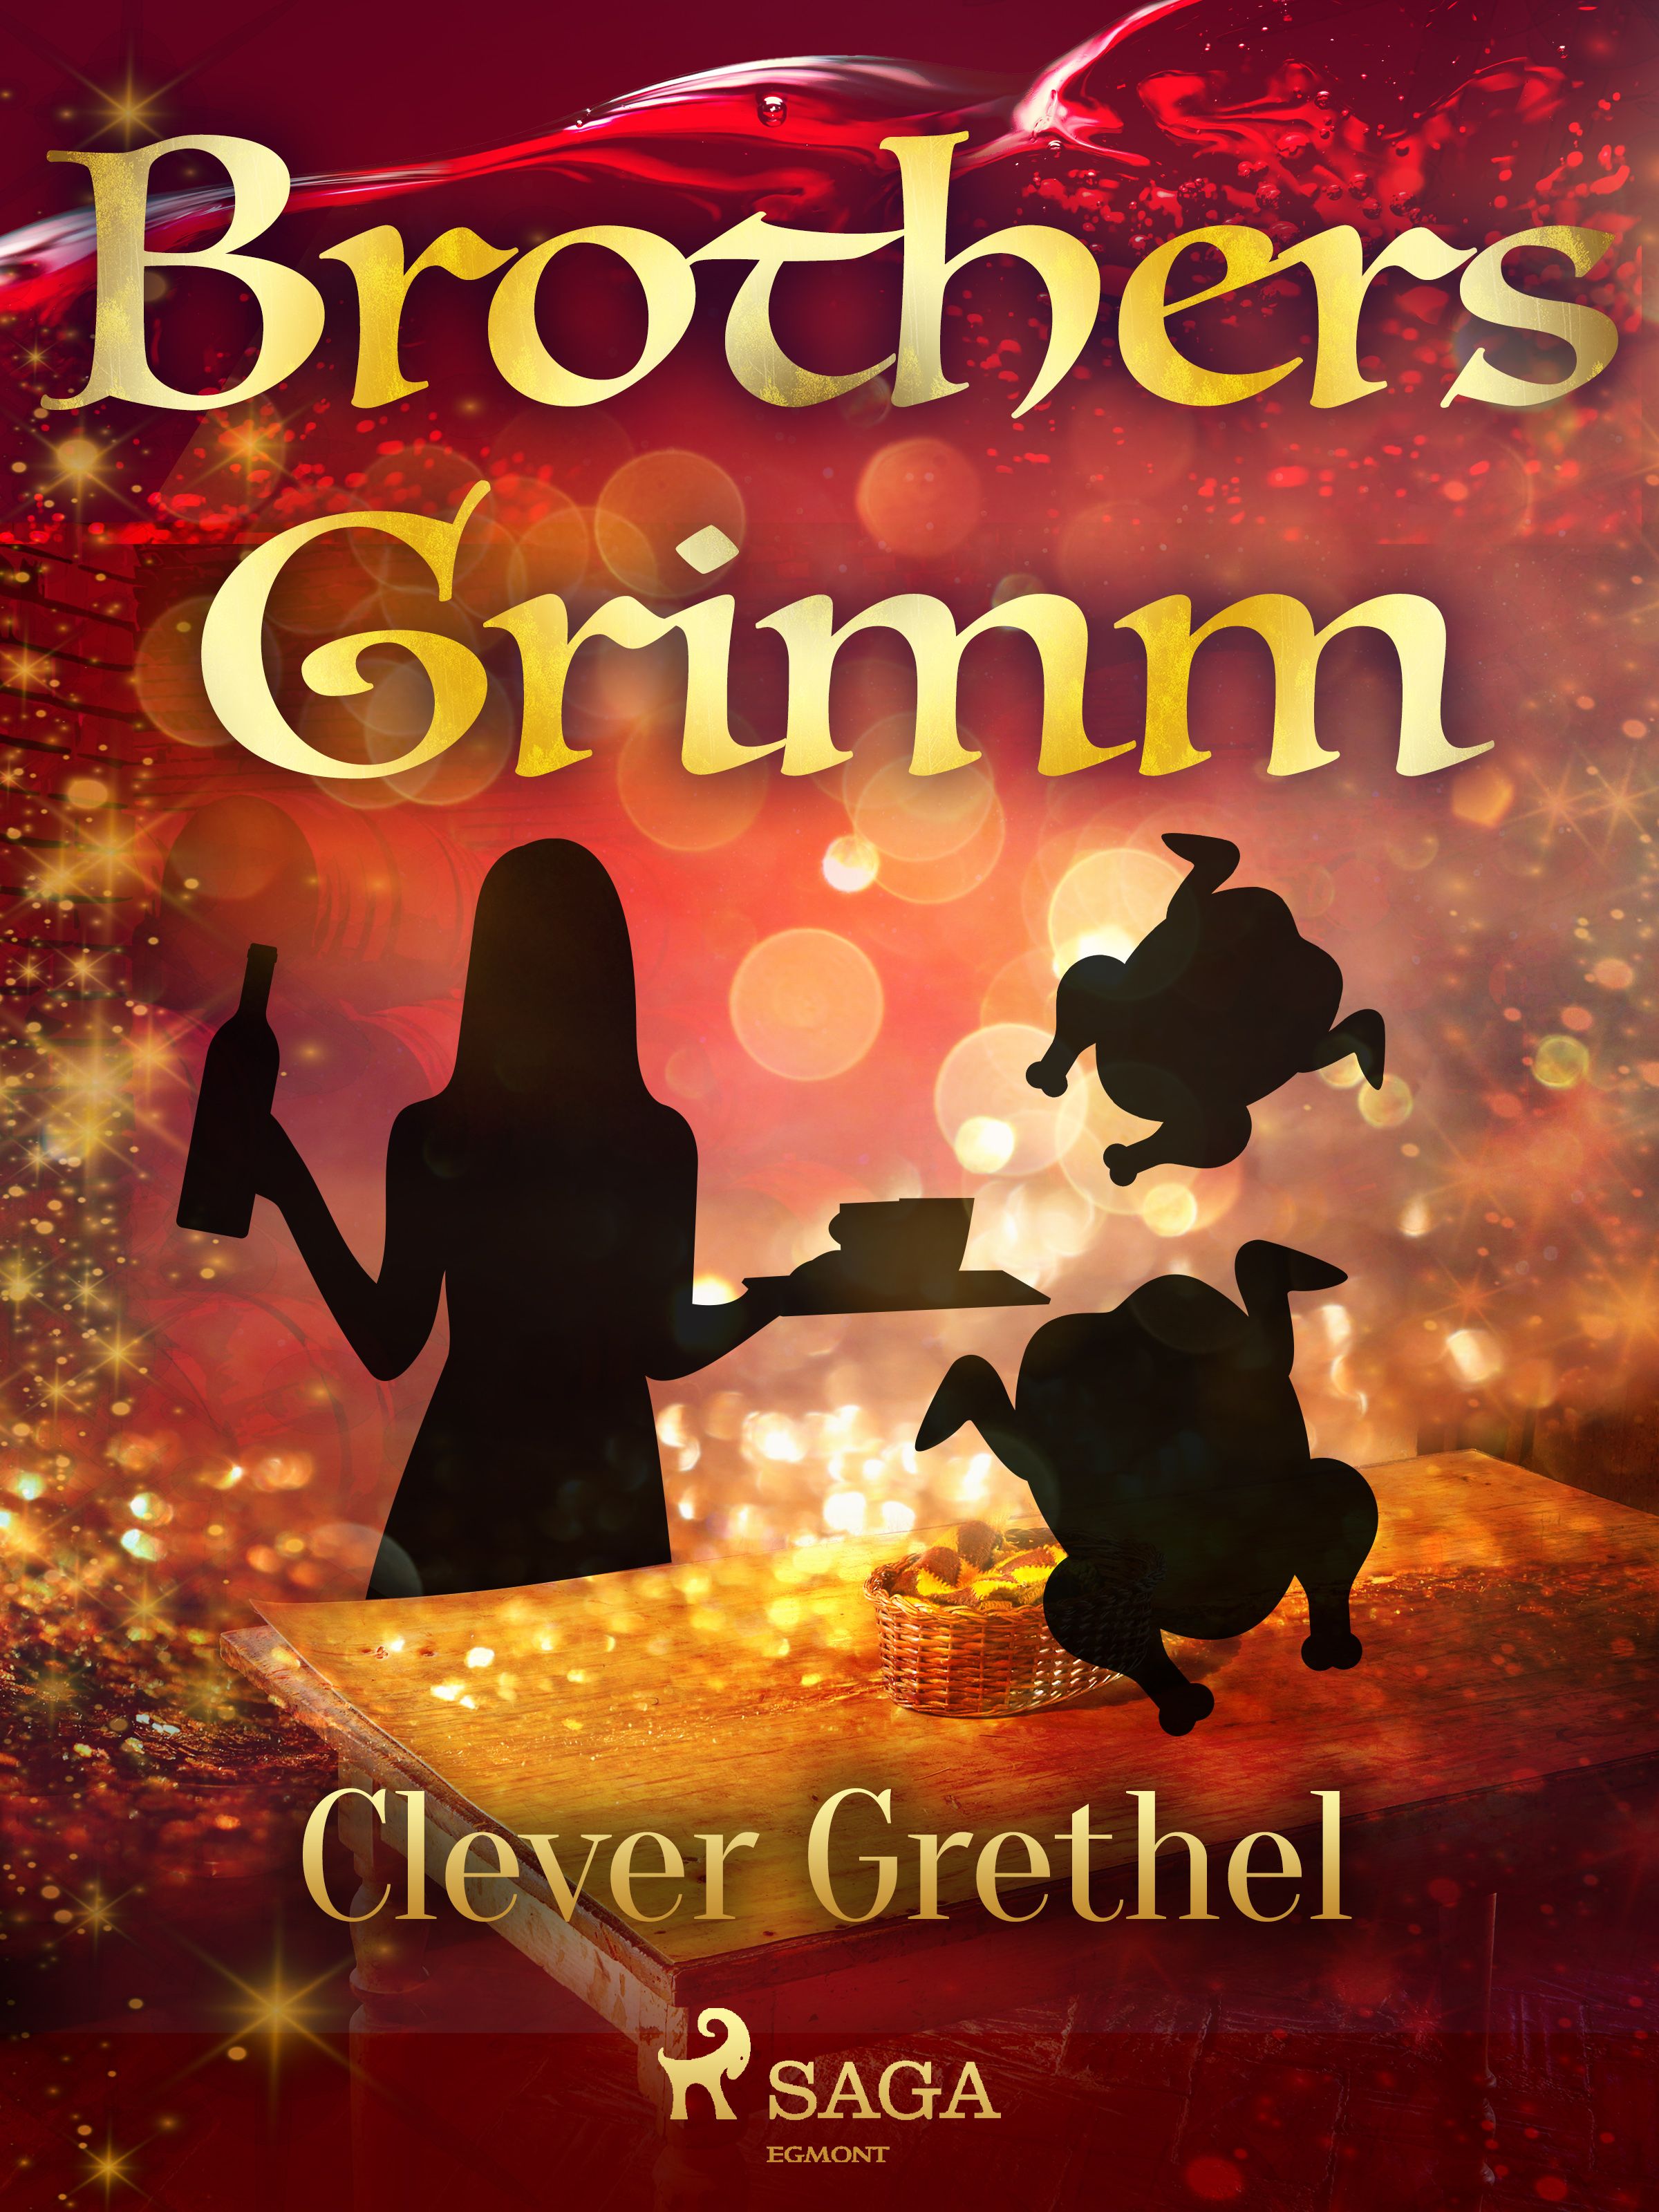 Clever Grethel, e-bok av Brothers Grimm